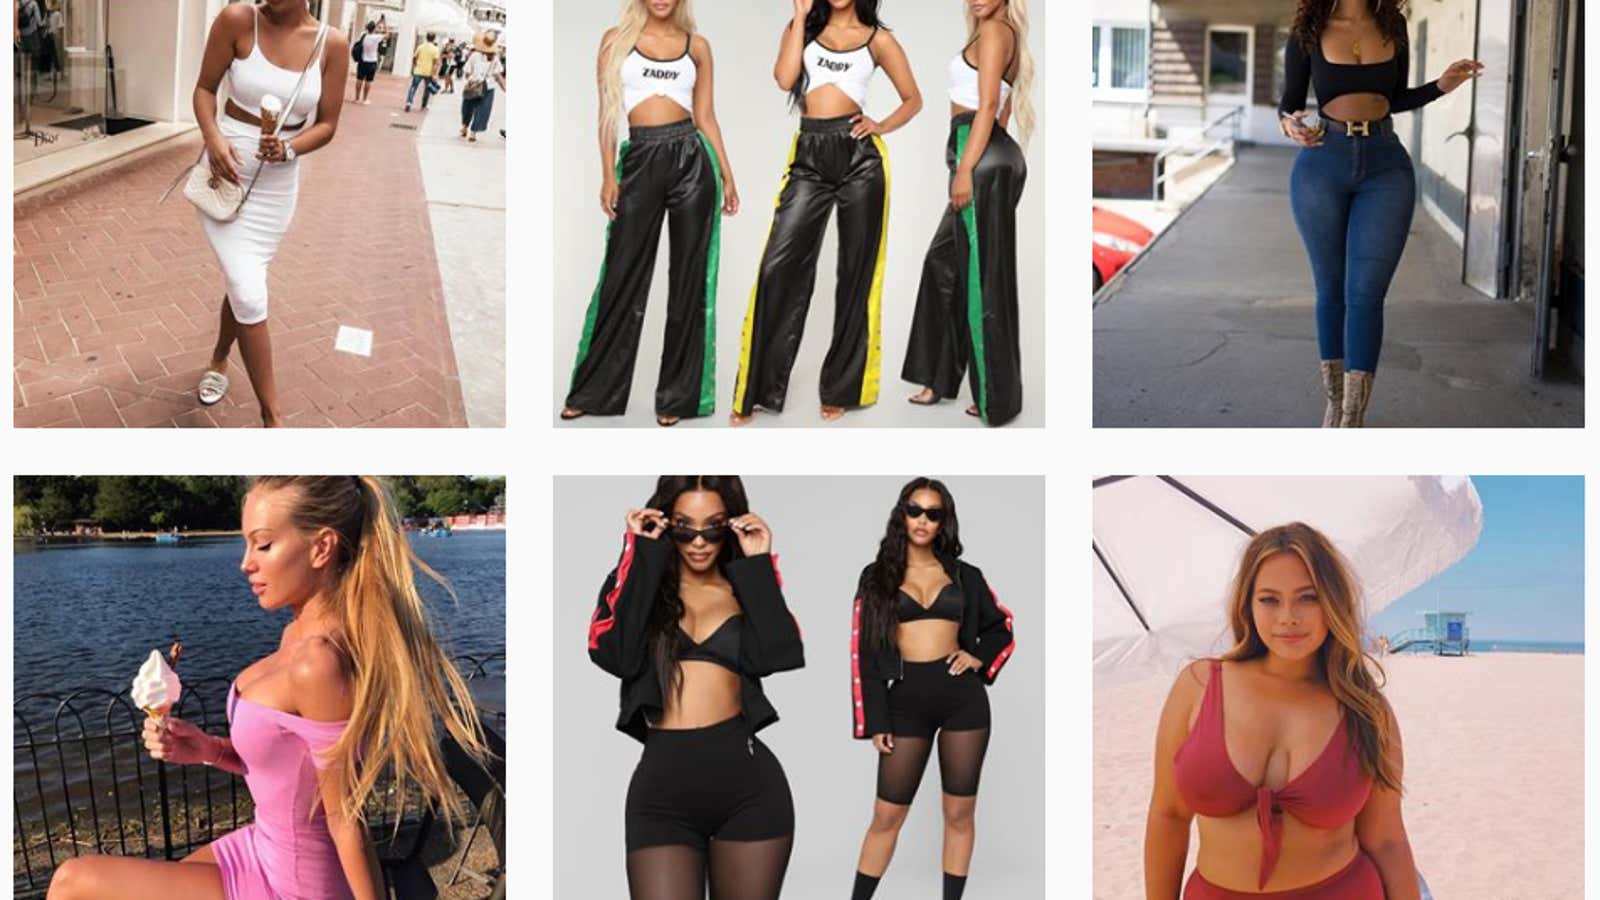 Fashion Nova’s Instagram page features customers’ photos alongside models.